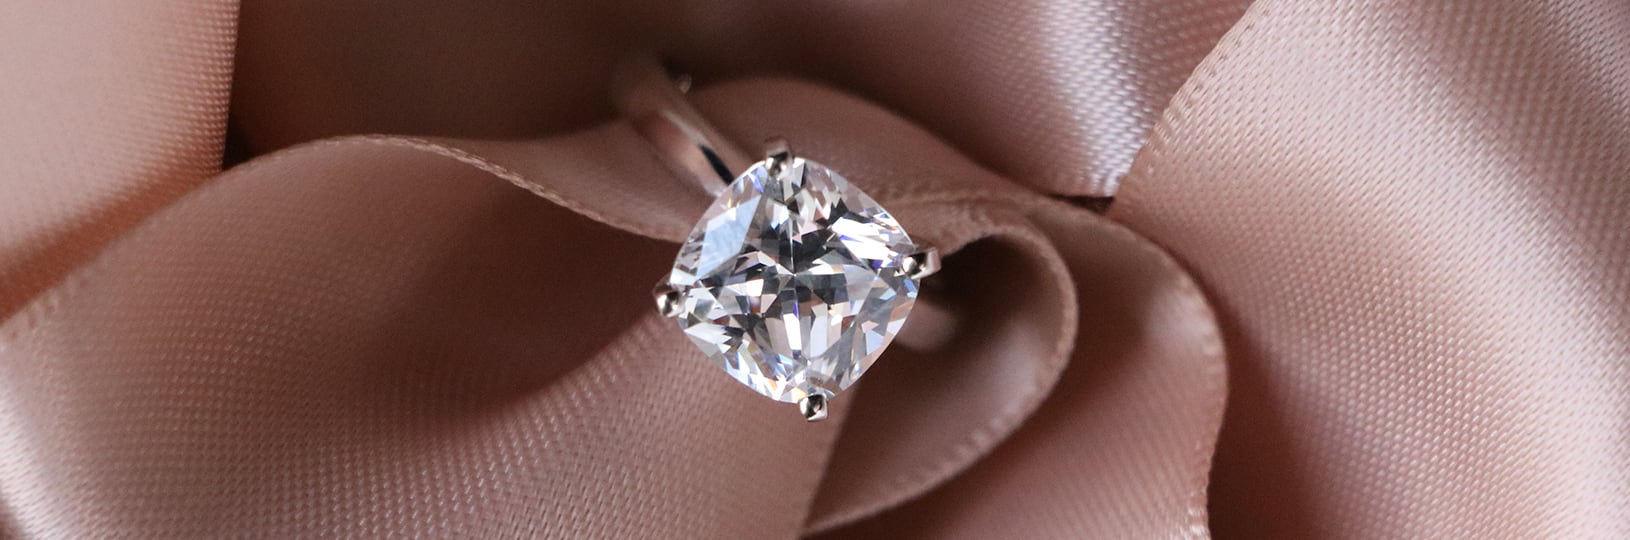 Cushion cut lab created diamond engagement ring.